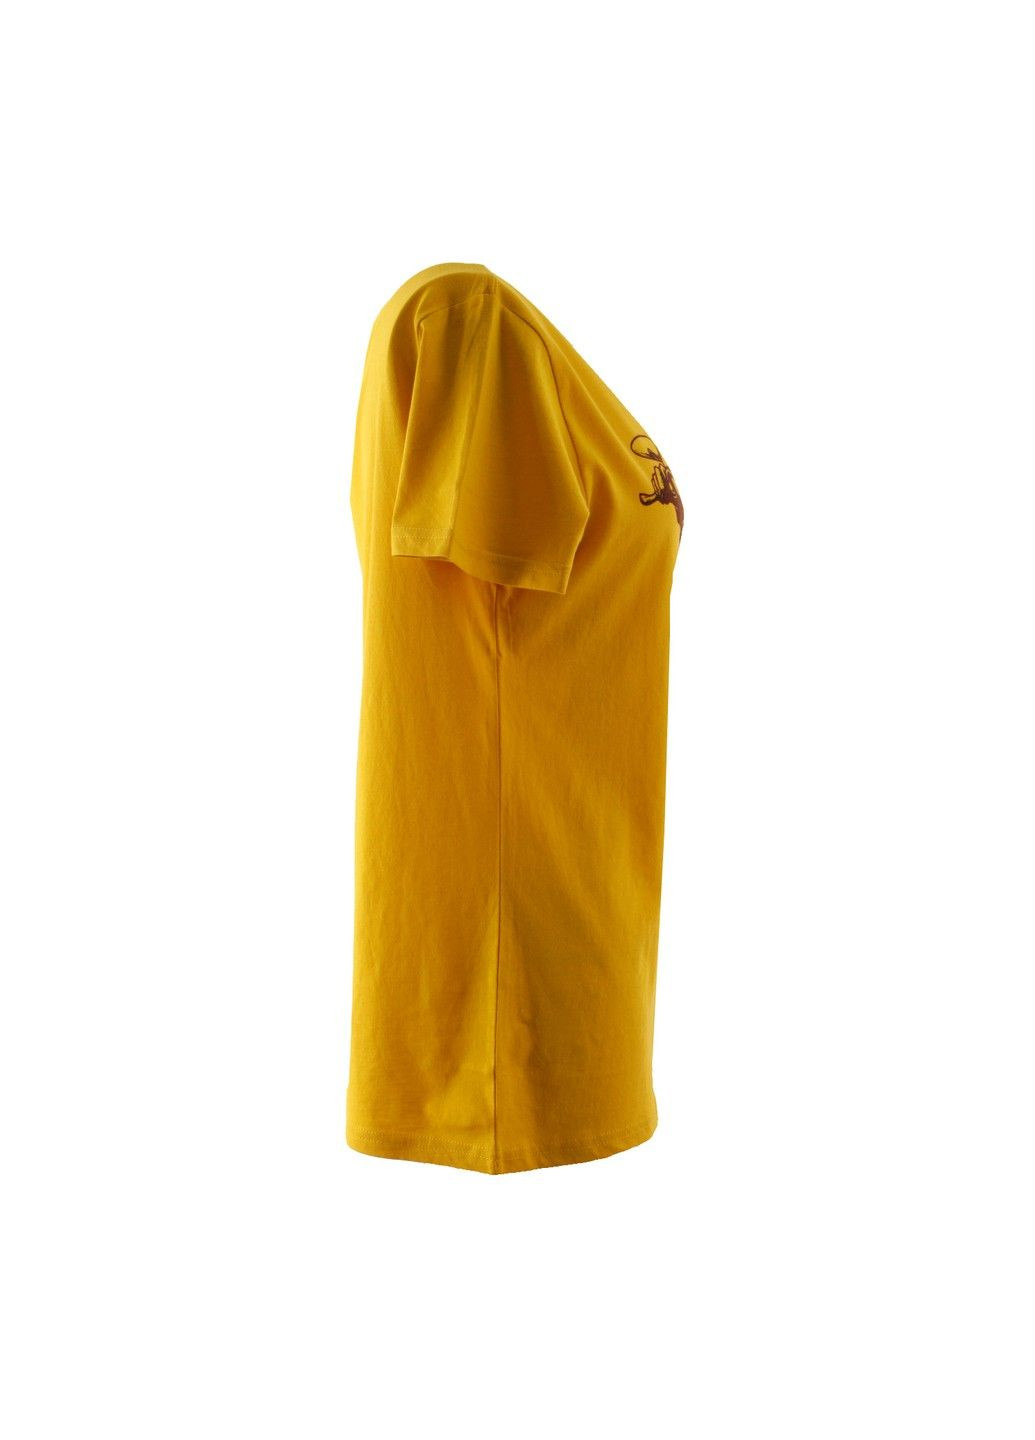 Жовта футболка жіноча Fine Look